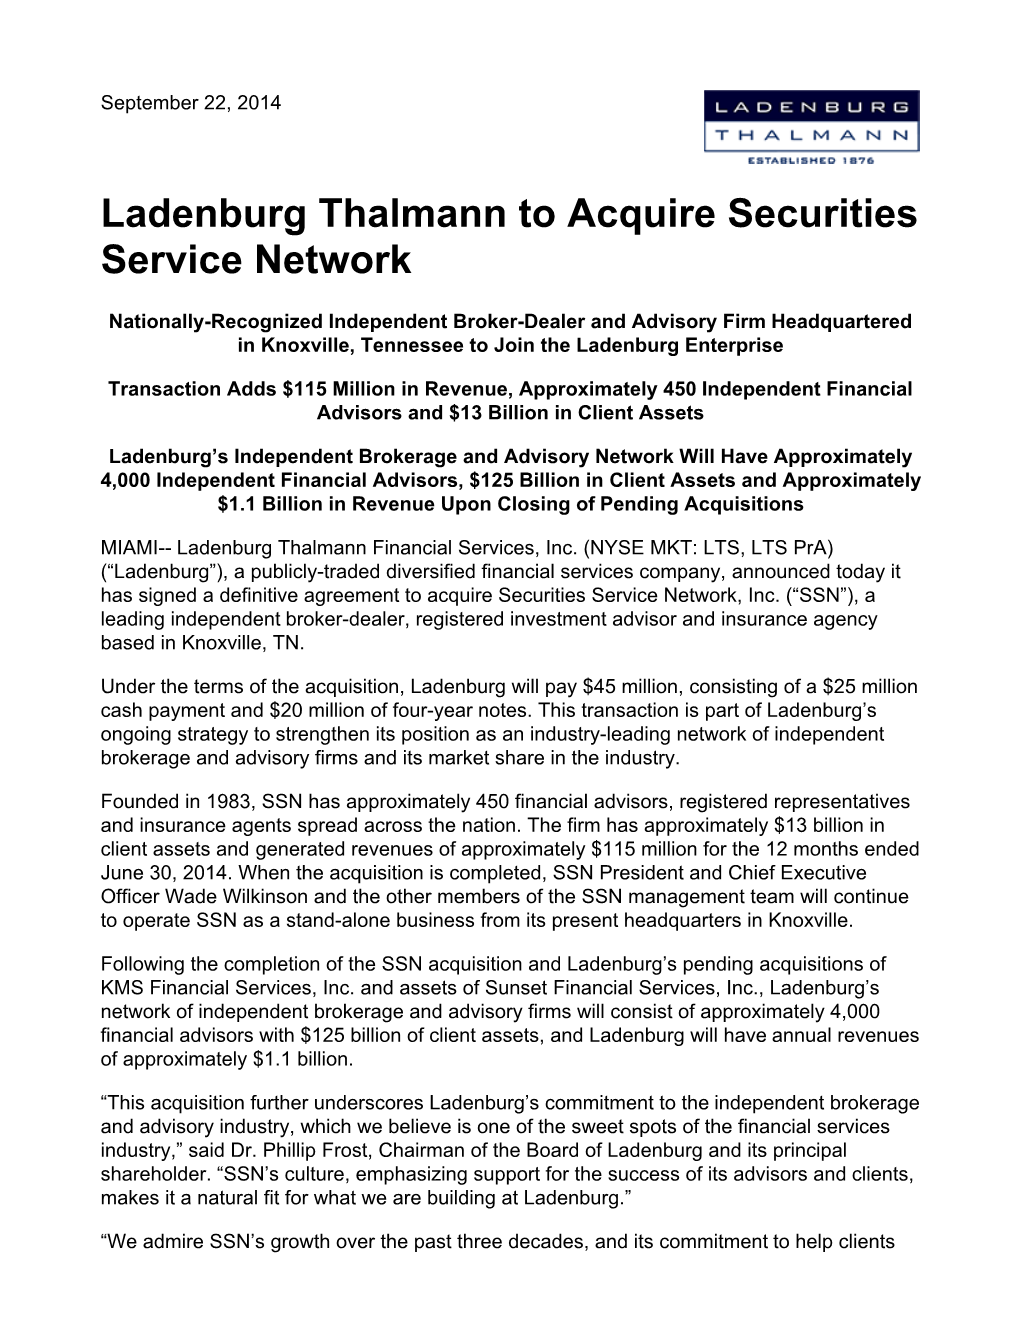 Ladenburg Thalmann to Acquire Securities Service Network